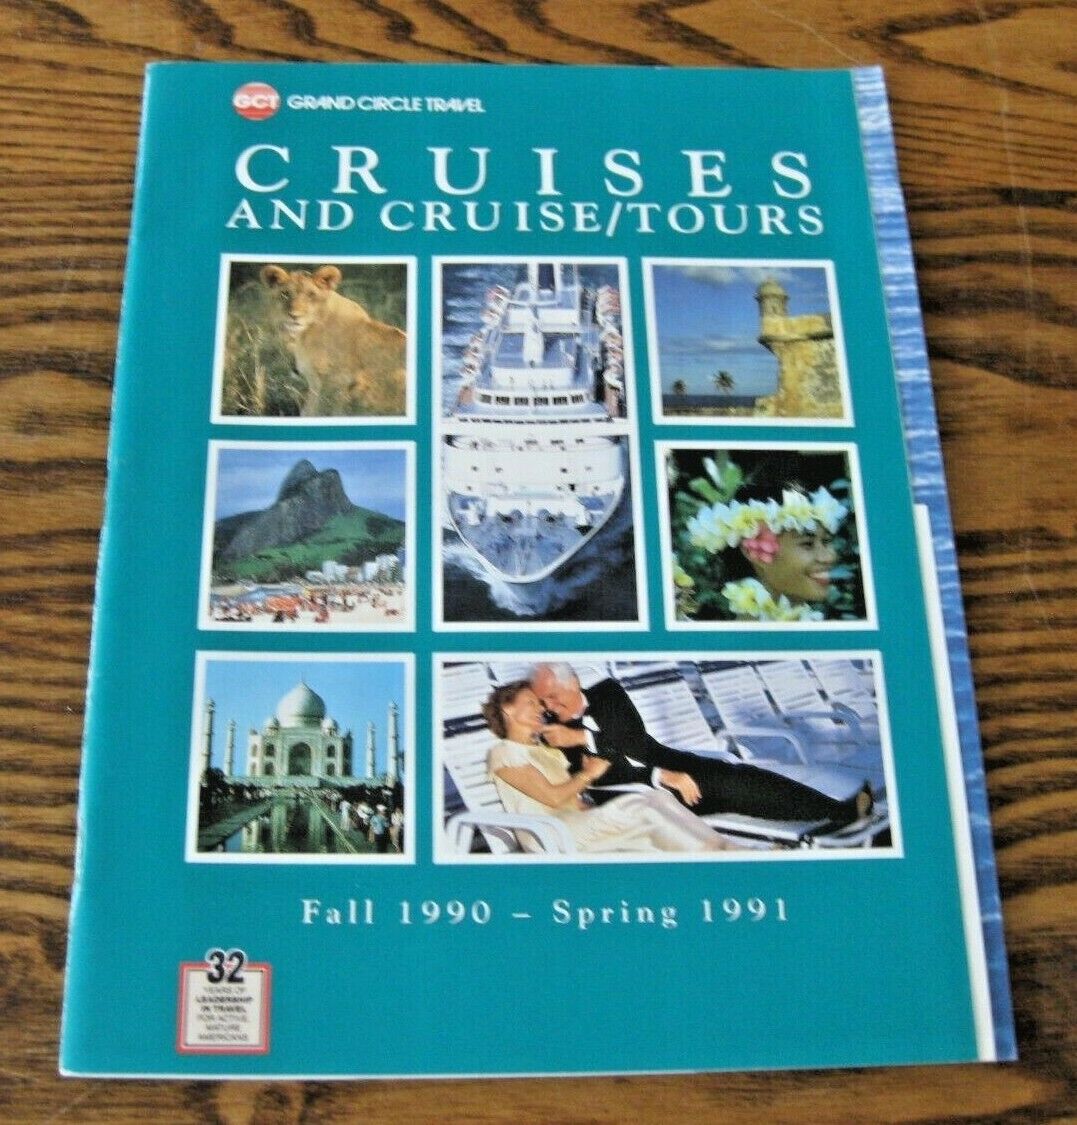 GRAND CIRCLE CRUISES 1990 1991 Cruise Tours Brochure Royal Viking NCL Crystal +9